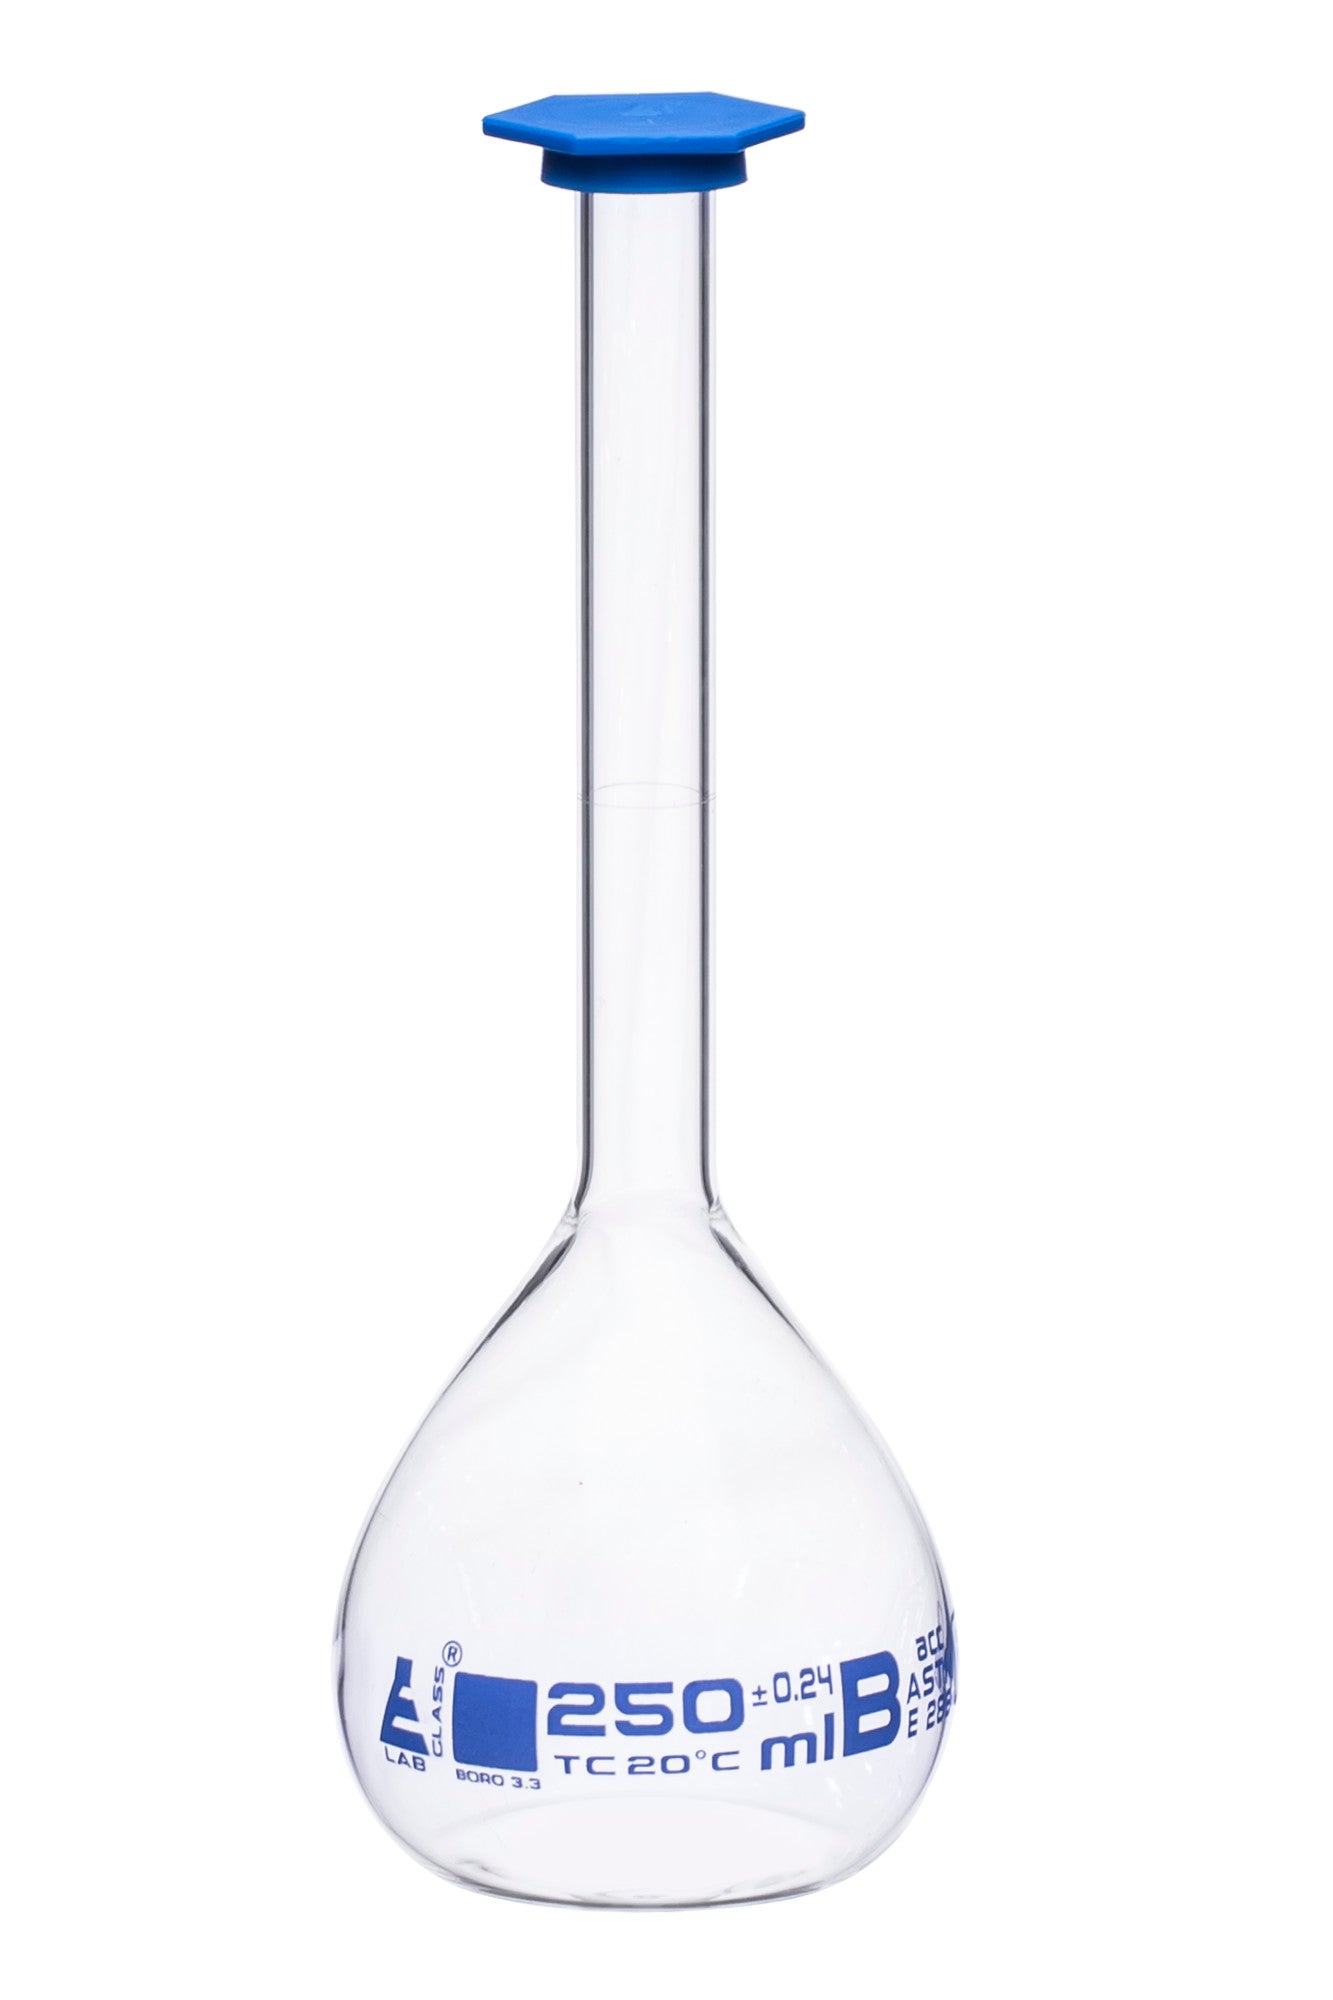 Borosilicate Volumetric Flask with Polyethylene Snap Cap, 250 ml, Class B, Blue Print, ASTM, Autoclavable